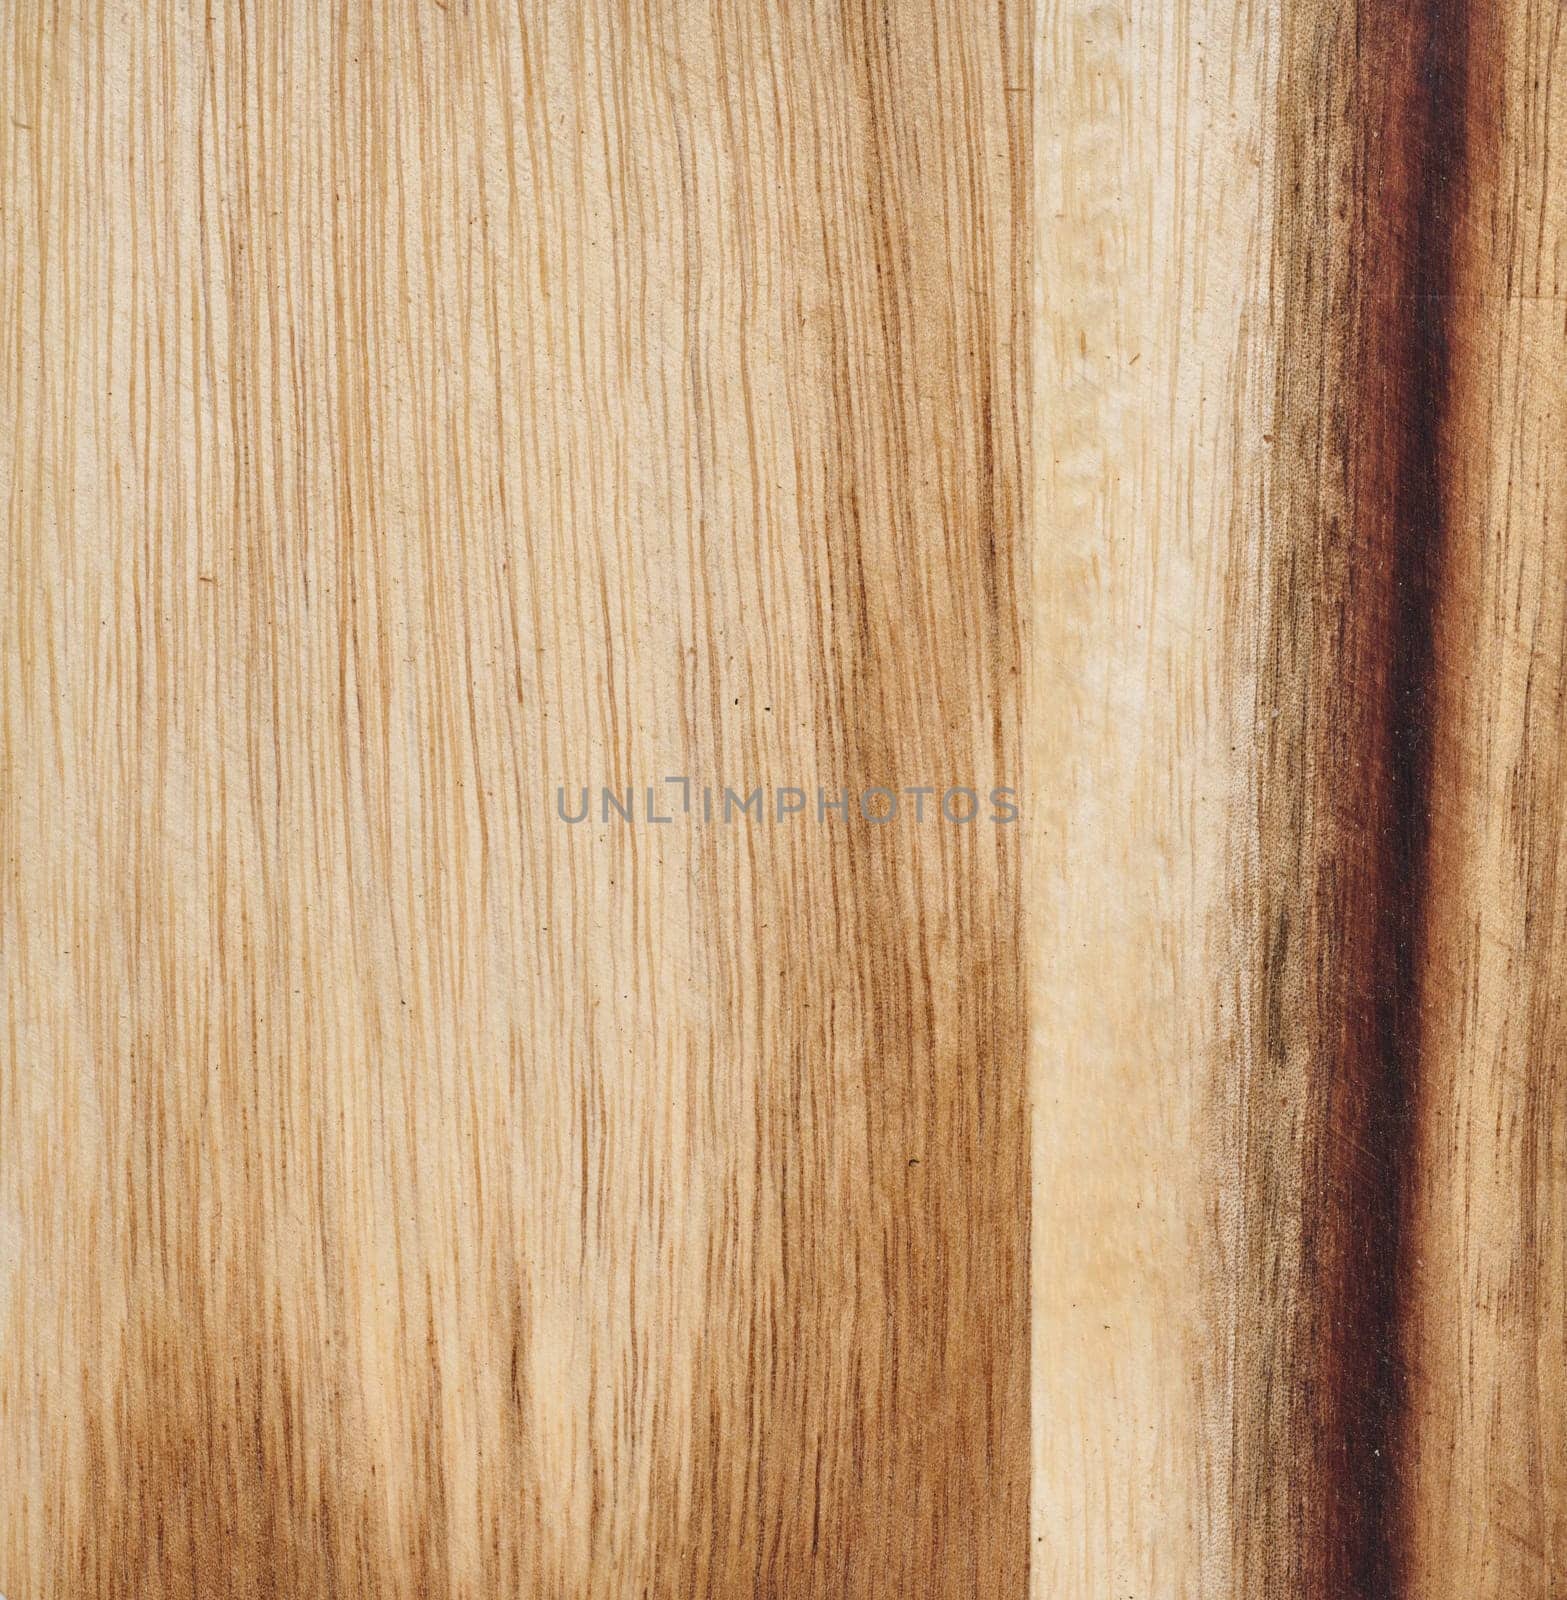 Pine wood texture, full frame by ndanko